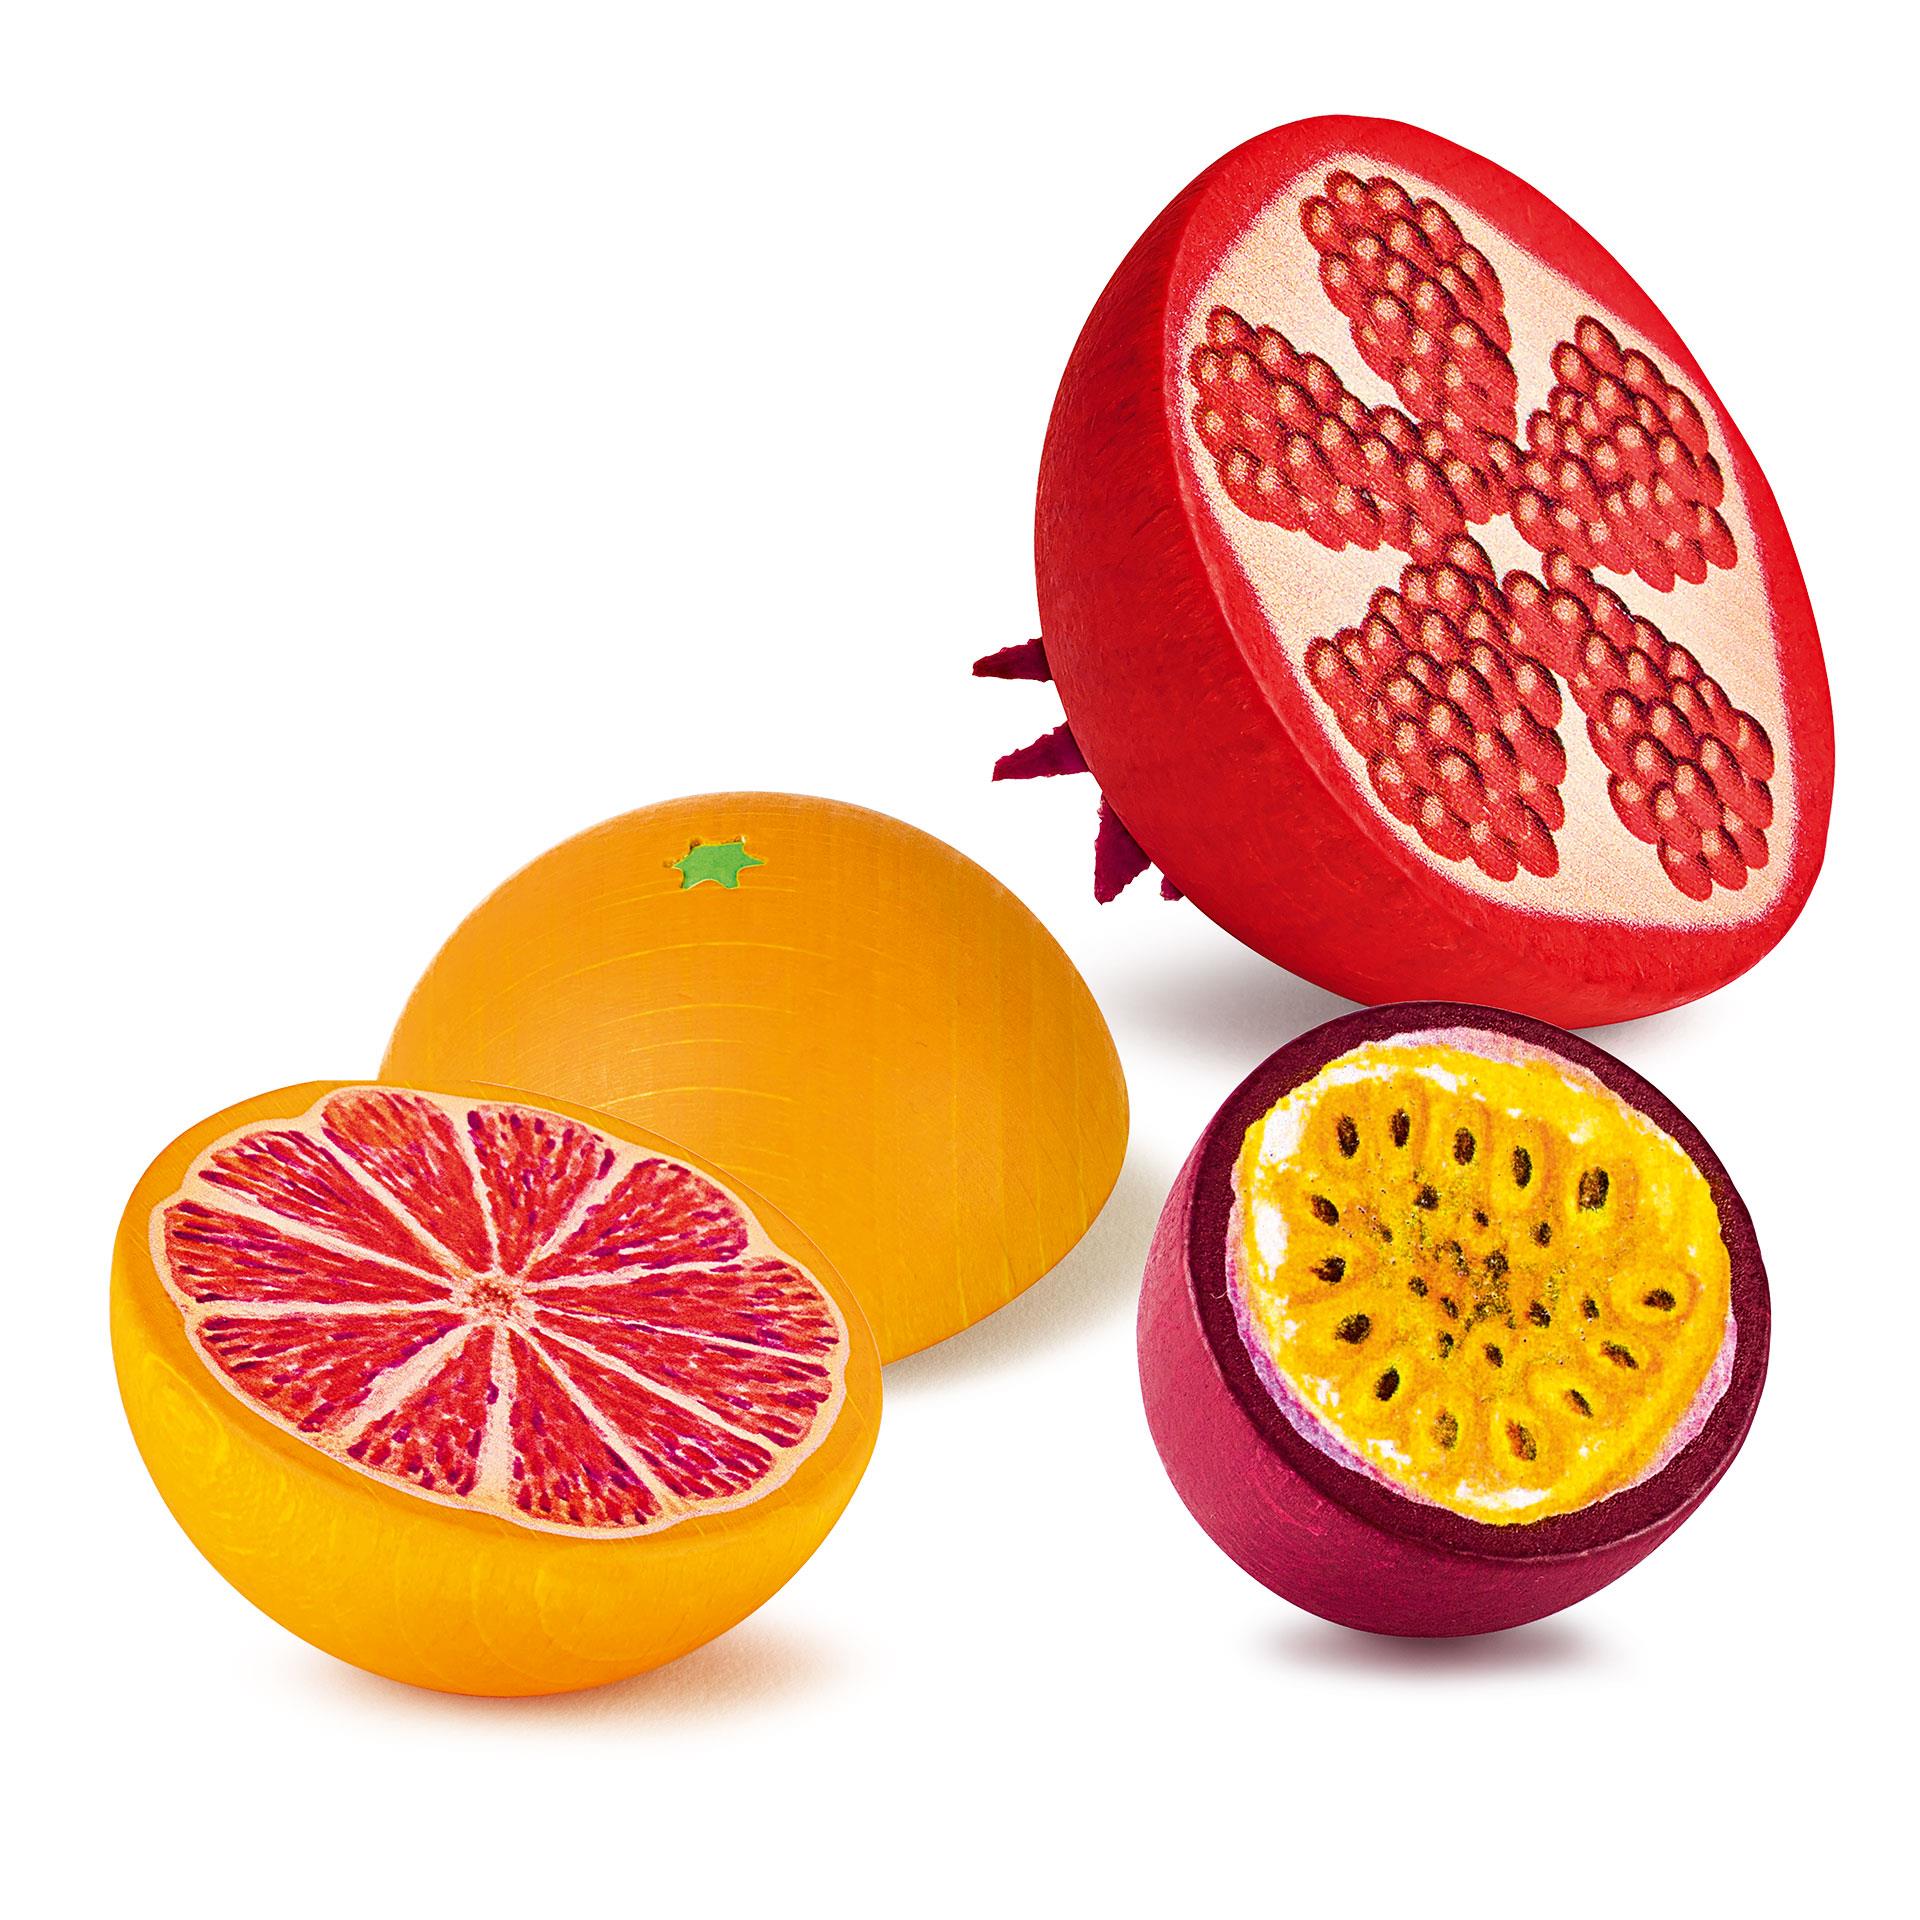 Grapefruit, Granatapfel, Passionsfrucht